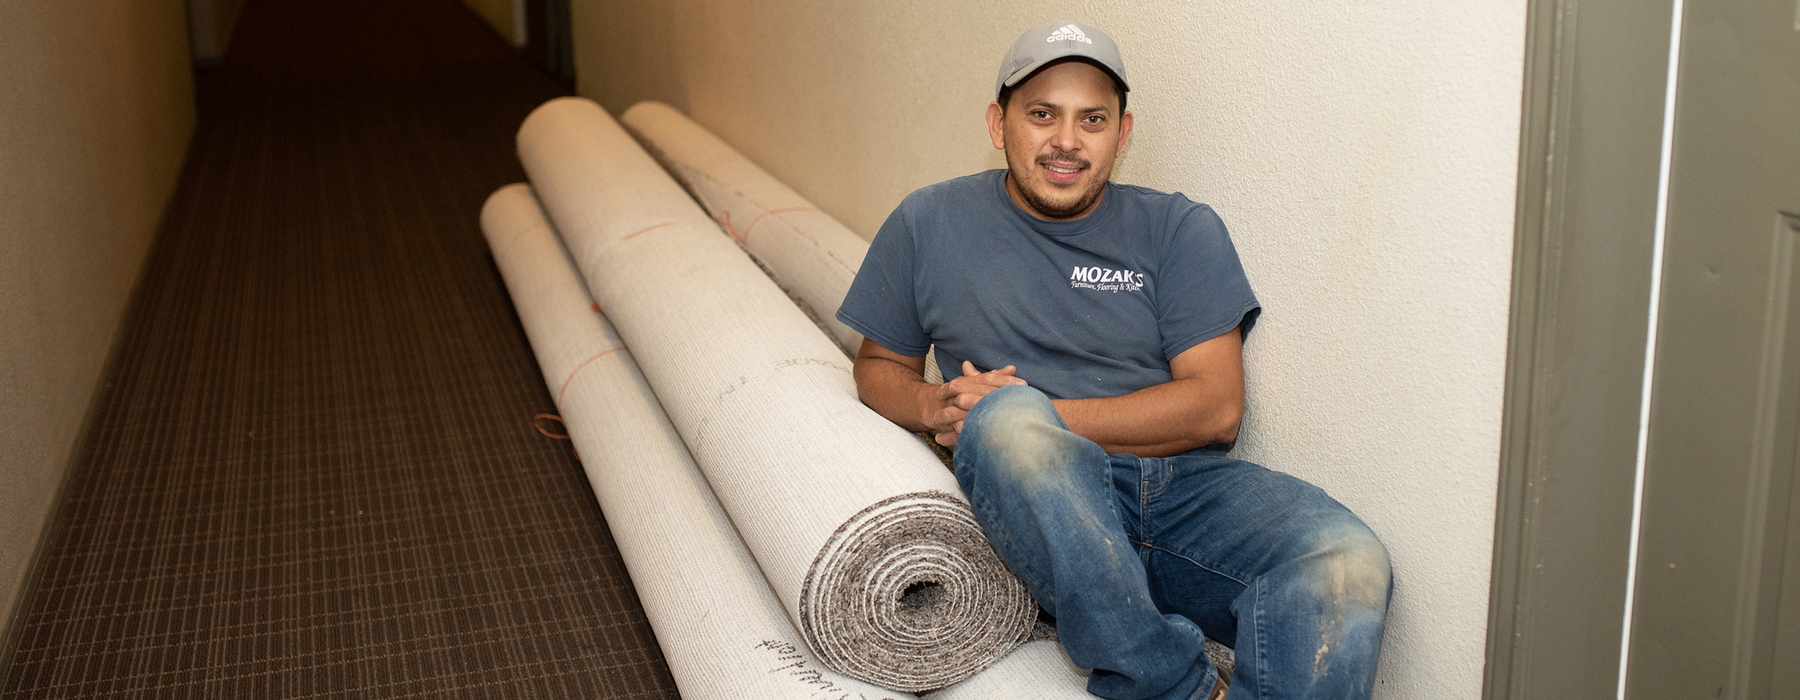 Hispanic male in grey shirt leans on a few rolls of carpet in a hallway